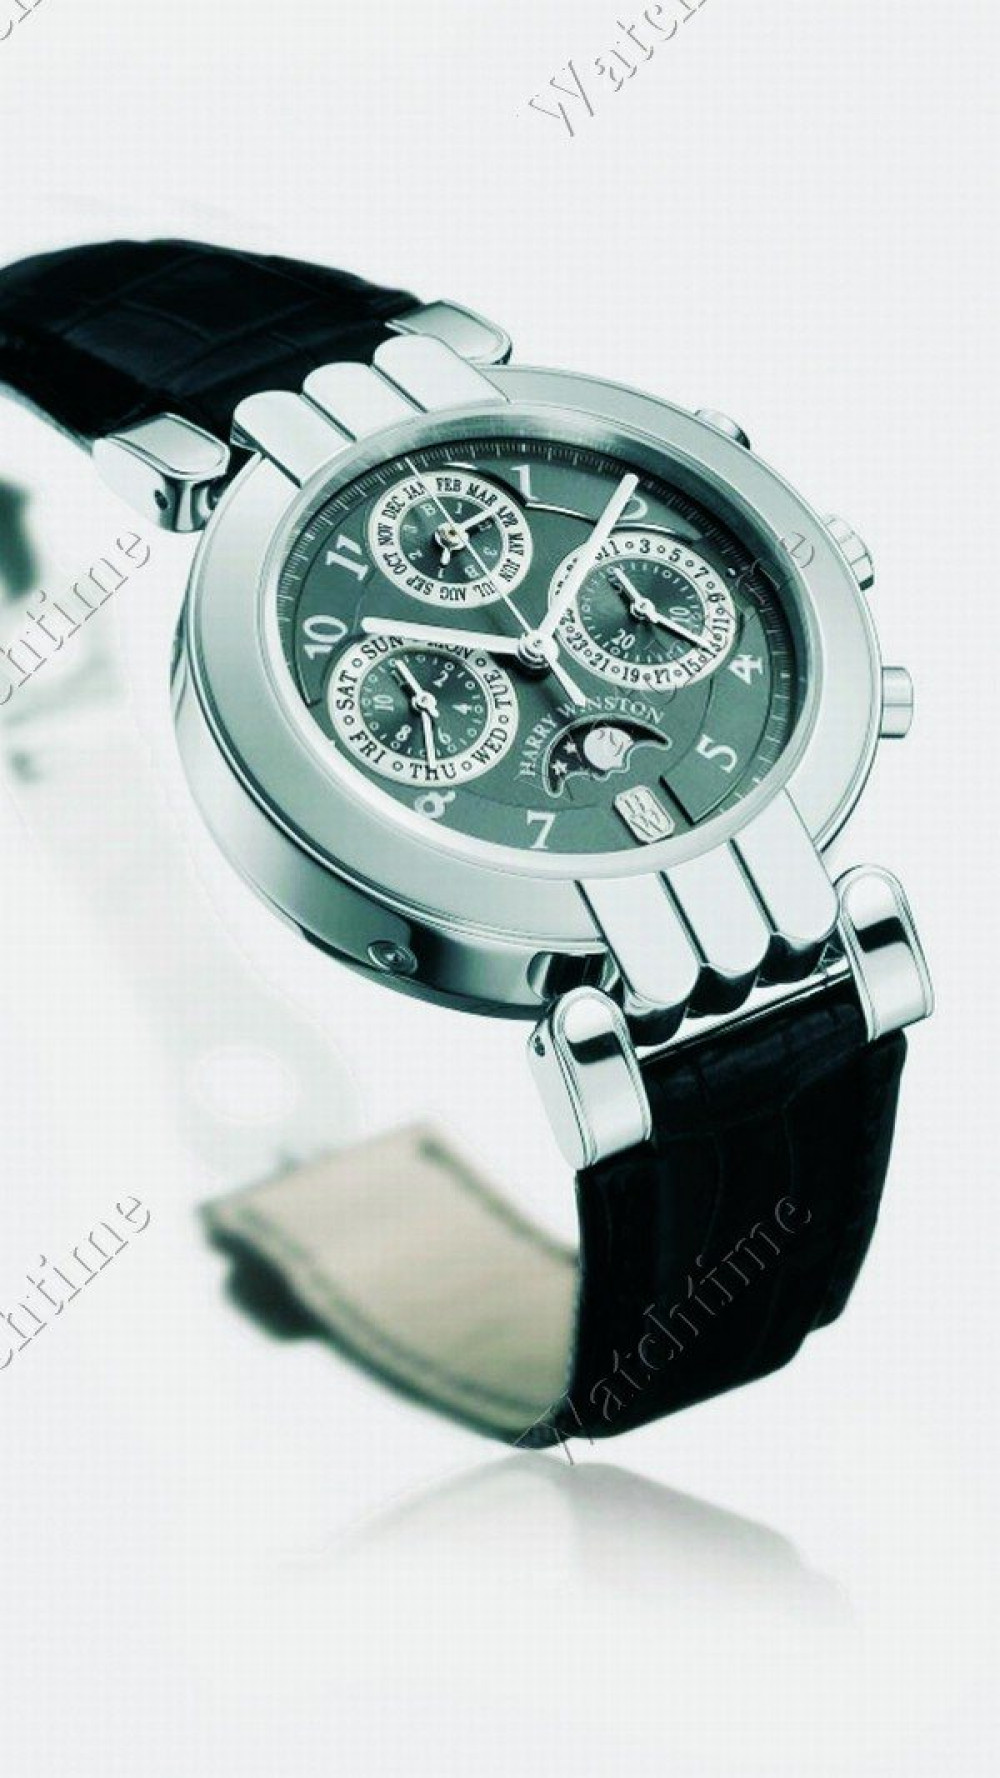 Zegarek firmy Harry Winston, model chronograph mit Ewigem Kalender